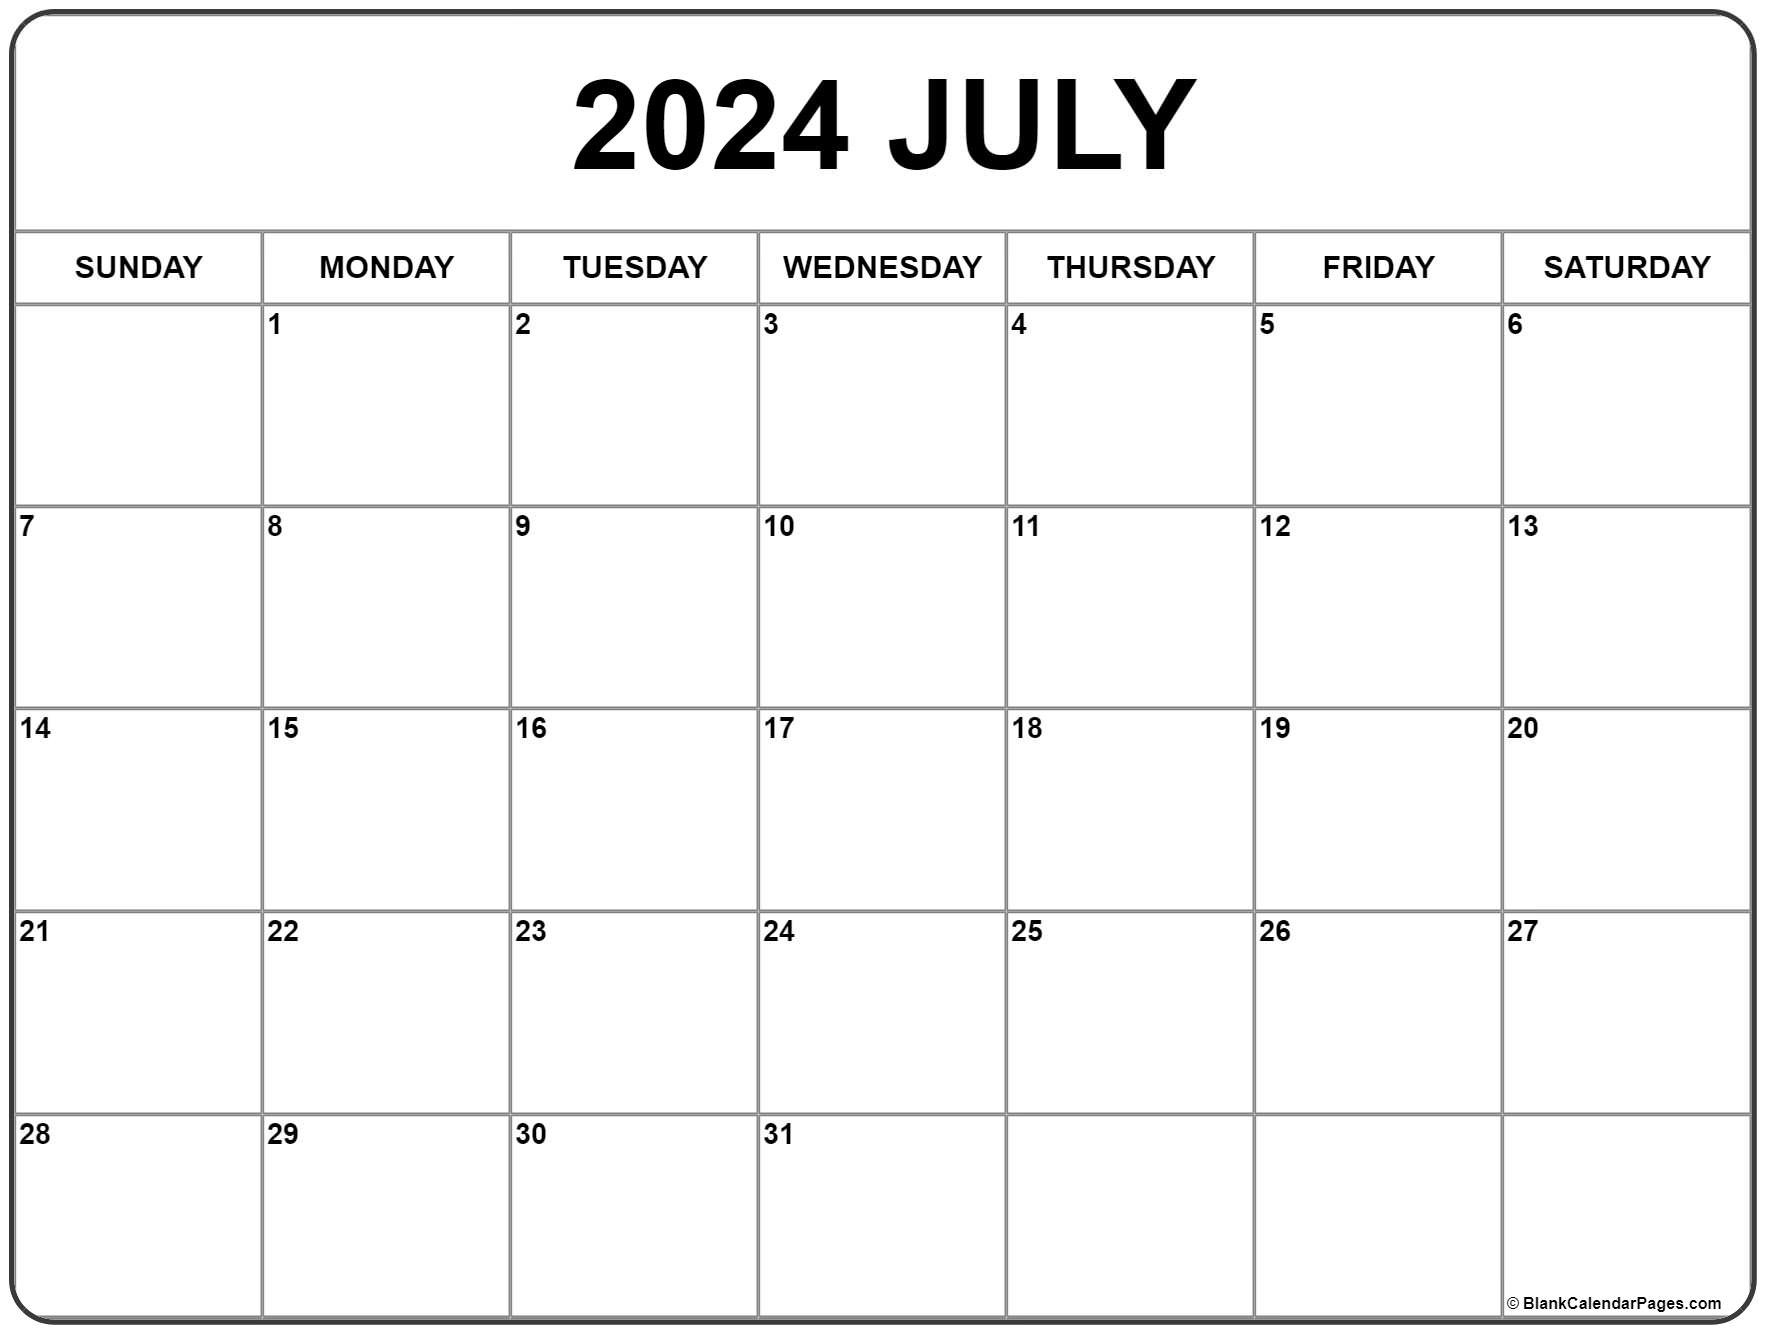 July 2024 Calendar | Free Printable Calendar throughout Free Printable Blank July 2024 Calendar